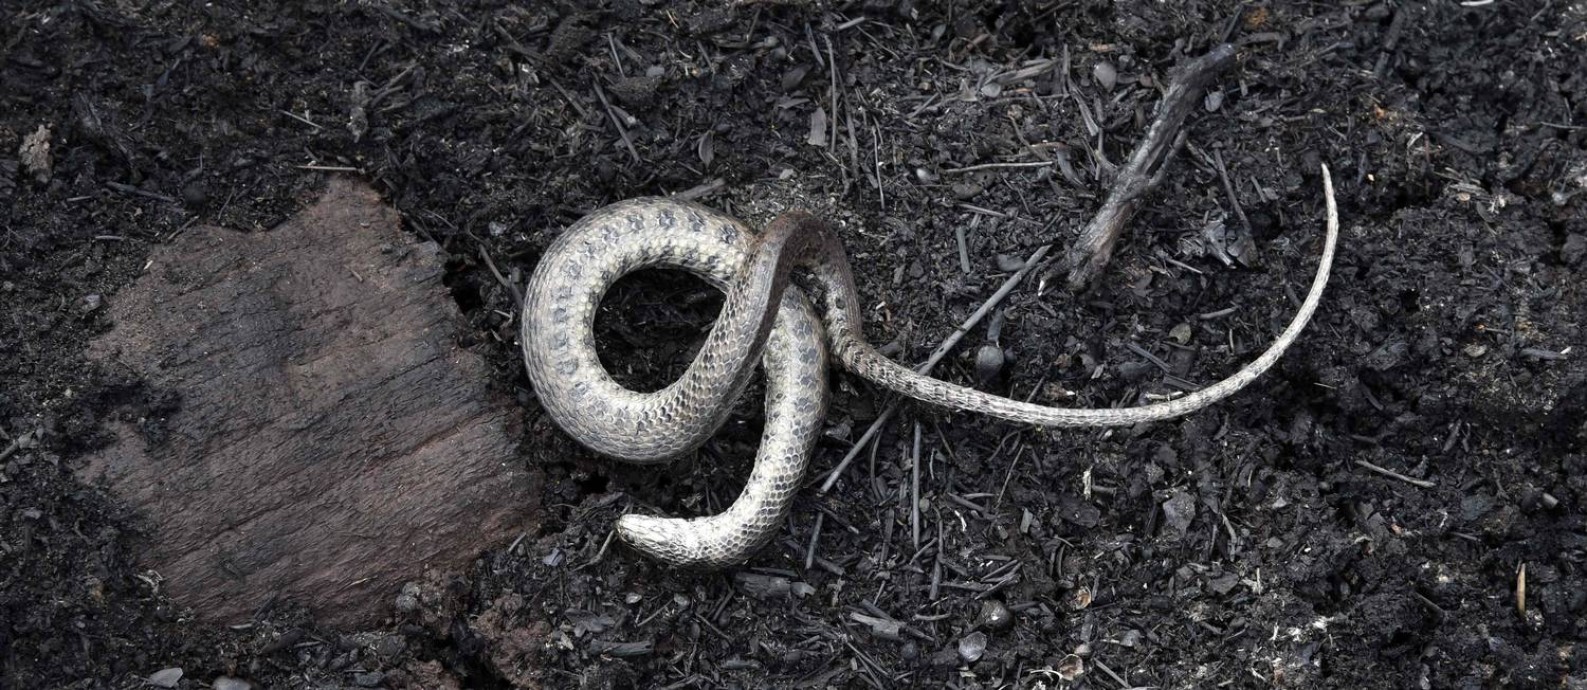 Cobra morta após queimada na Bolívia Foto: AIZAR RALDES / AFP